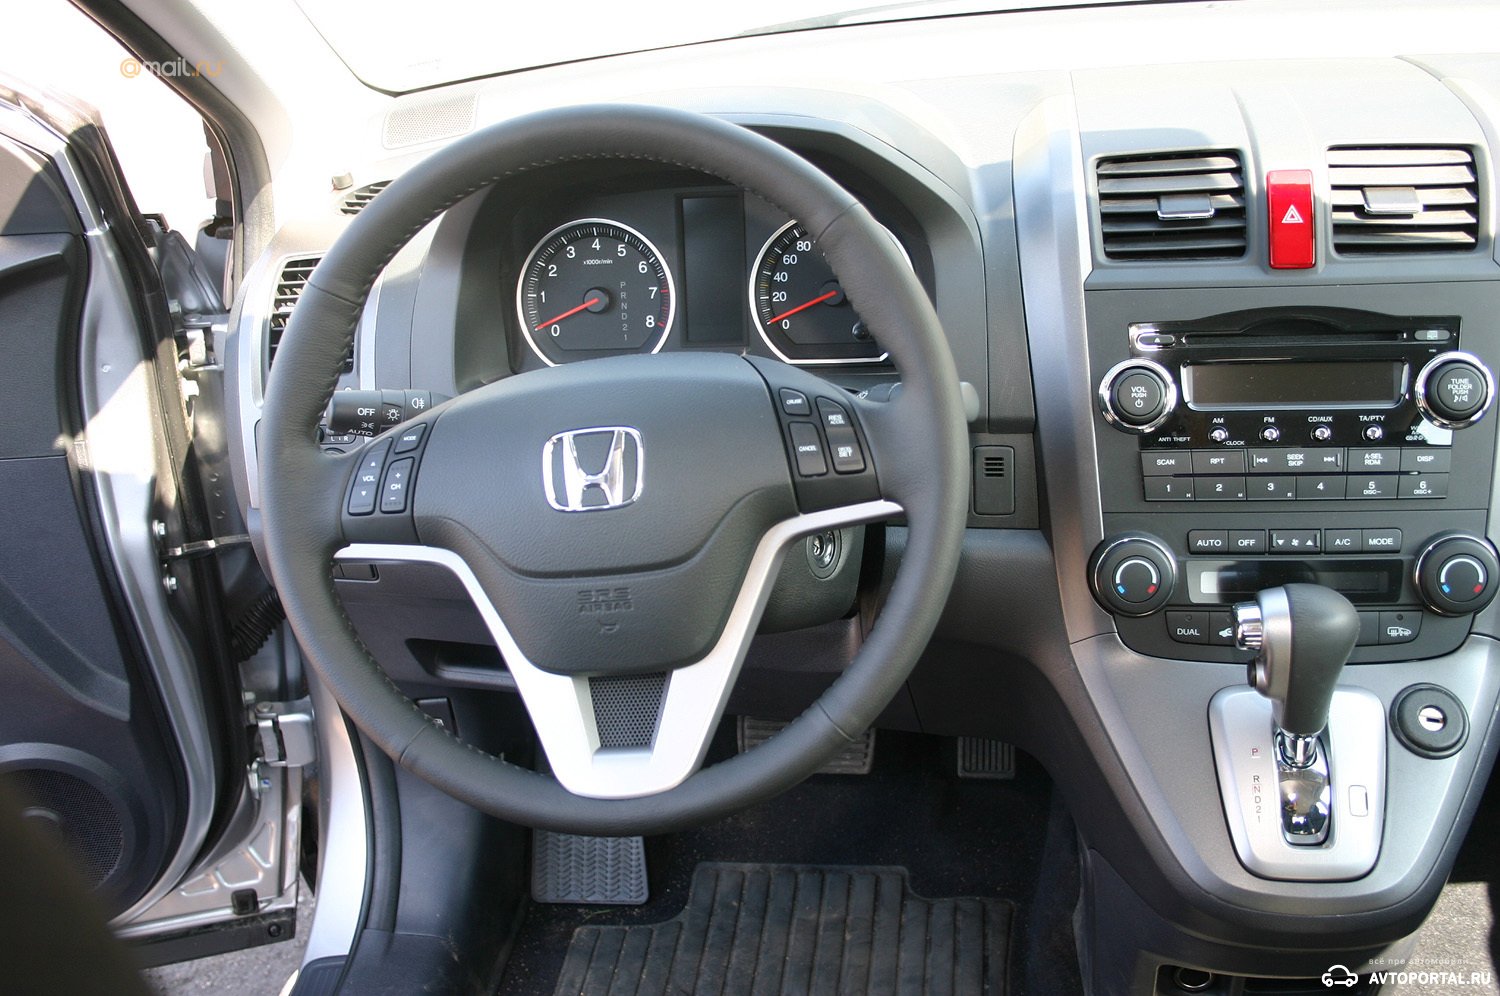 Автомат honda crv. Honda CR-V 2007 салон. Honda CRV 3 салон. Хонда СРВ 3 поколения. Торпеда Хонда СРВ 3.